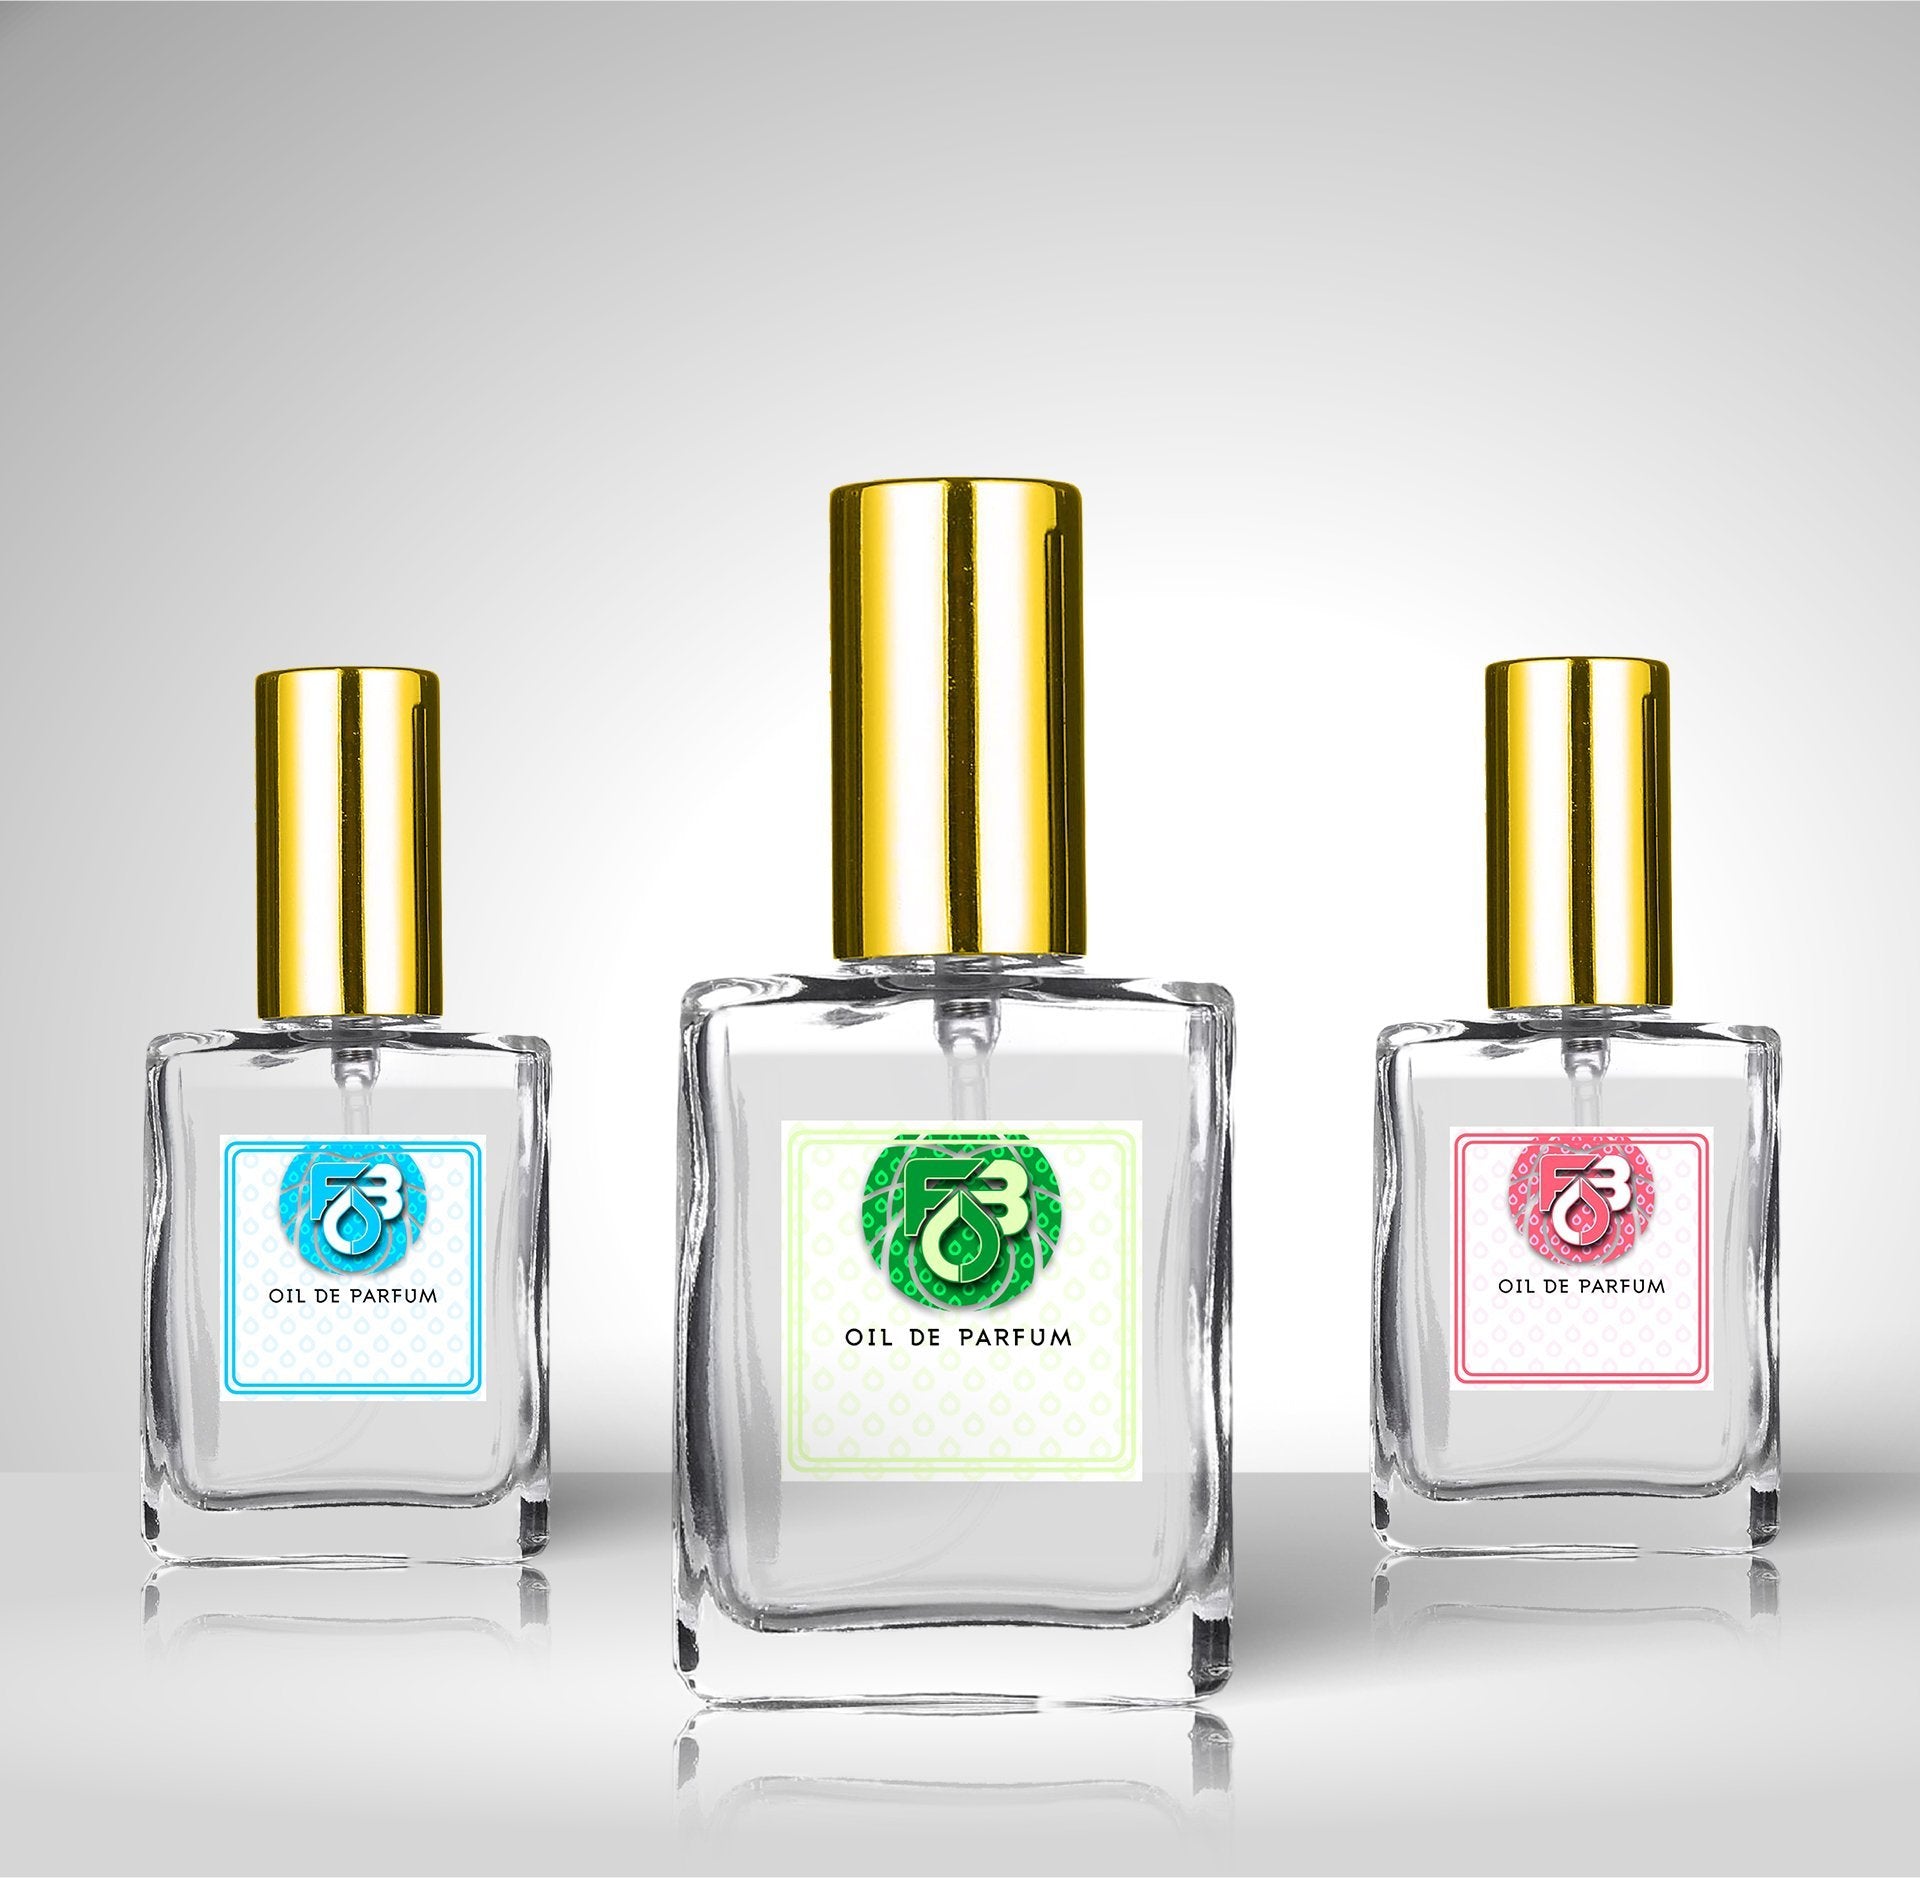 Compare Aroma To Chanel #5-4